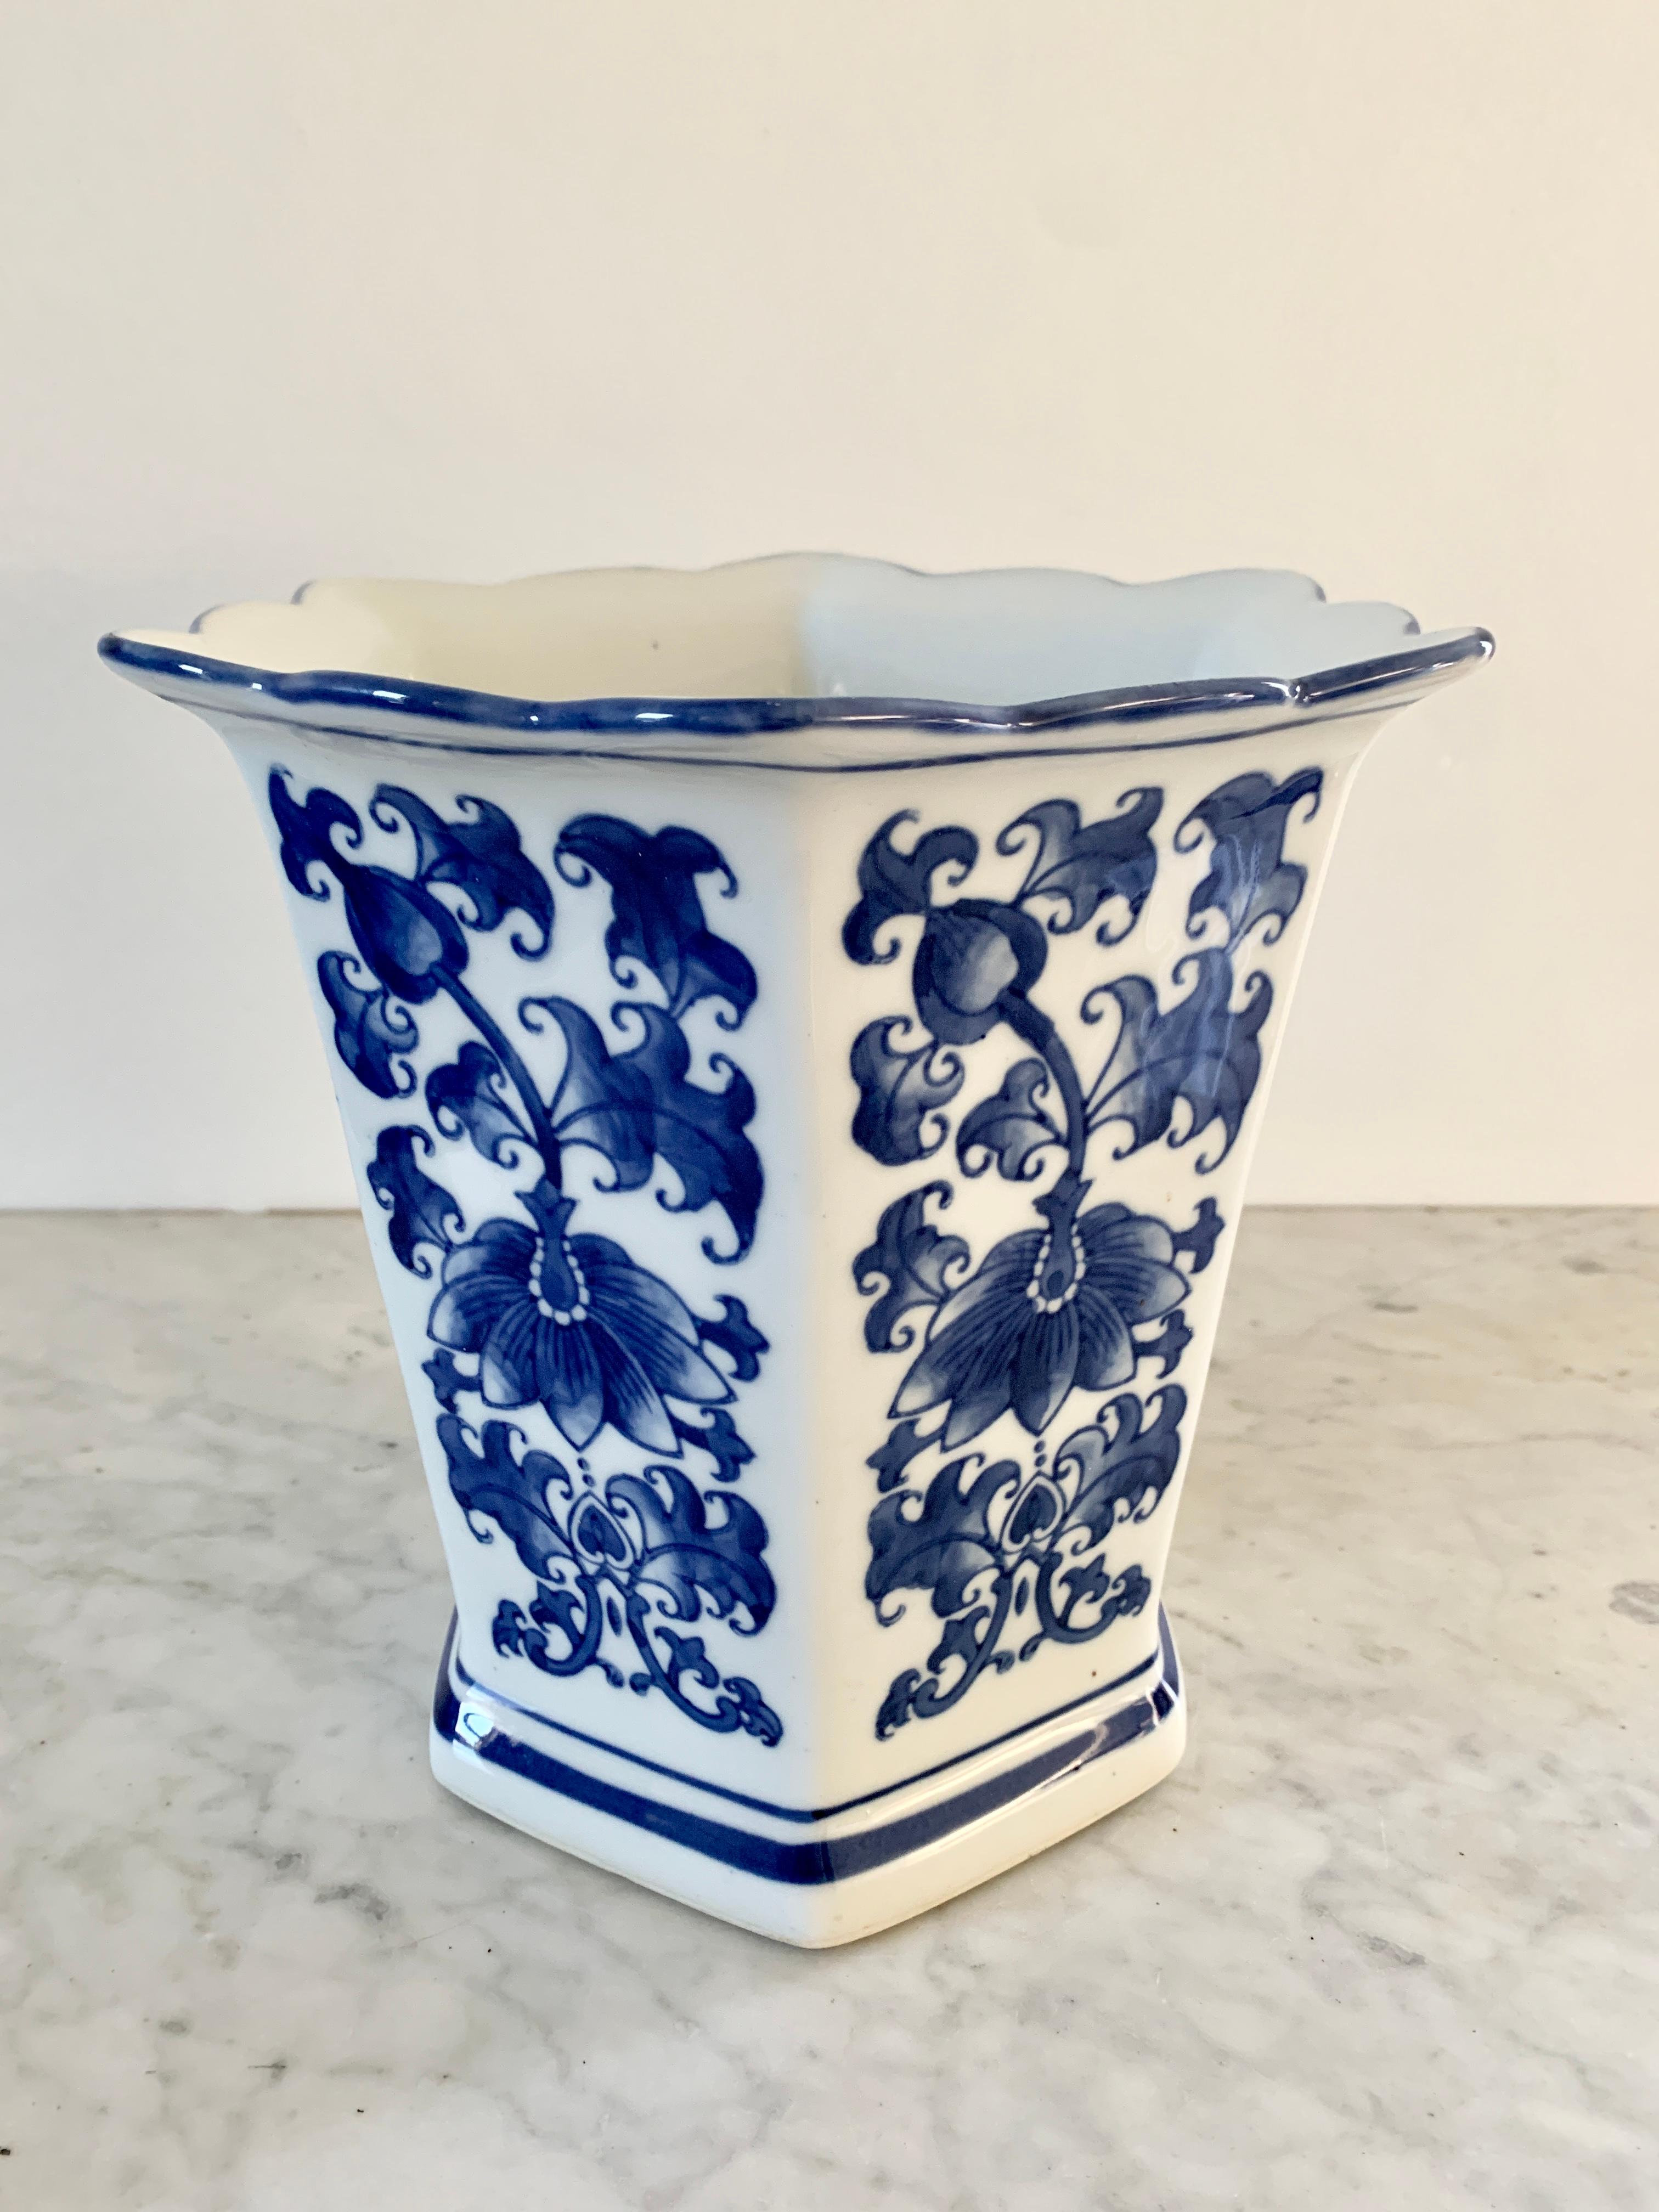 Chinoiserie Blue and White Porcelain Hexagonal Vases, Pair For Sale 2